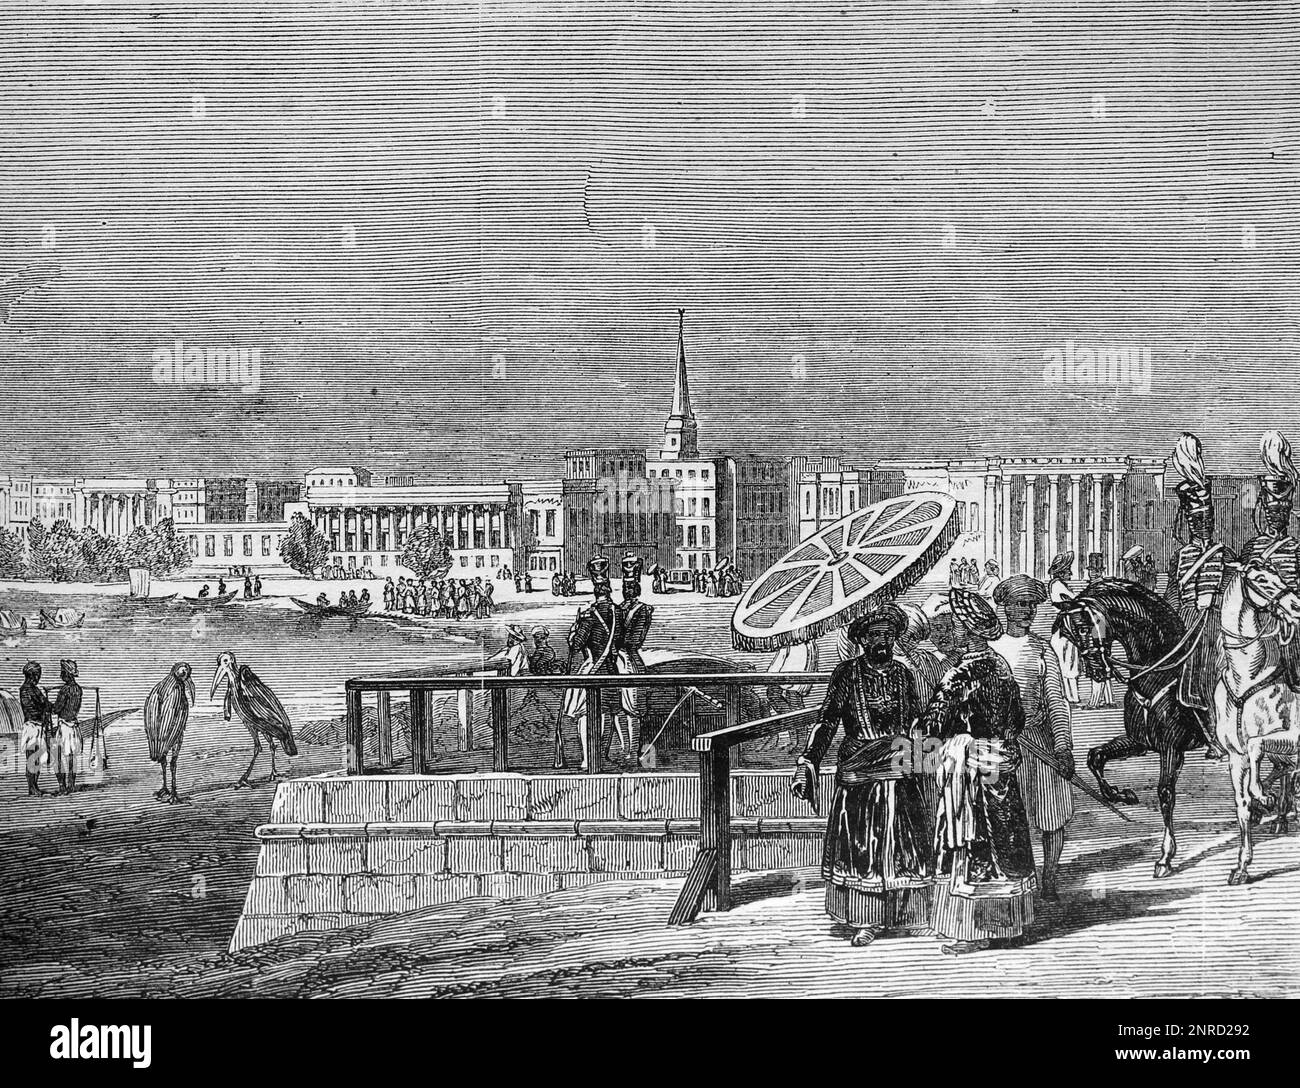 Blick auf Kalkutta im 19. Jahrhundert. Schwarzweiß-Illustration Stockfoto